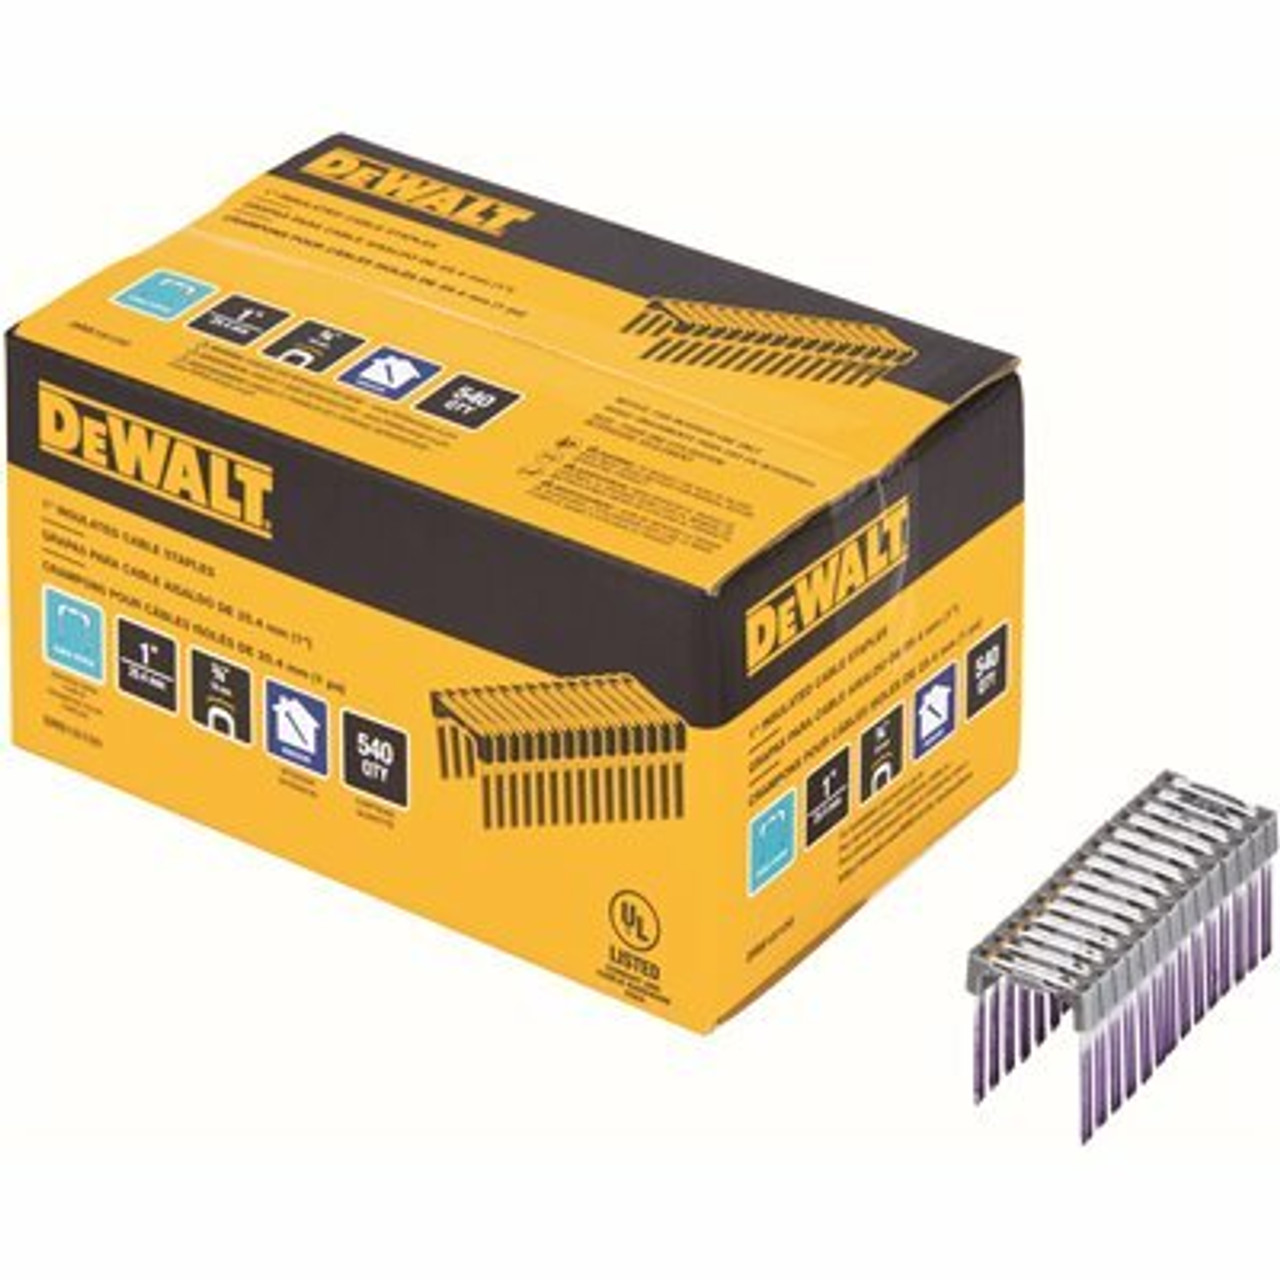 Dewalt 1 In. Insulated Electrical Staples (540 Per Box)